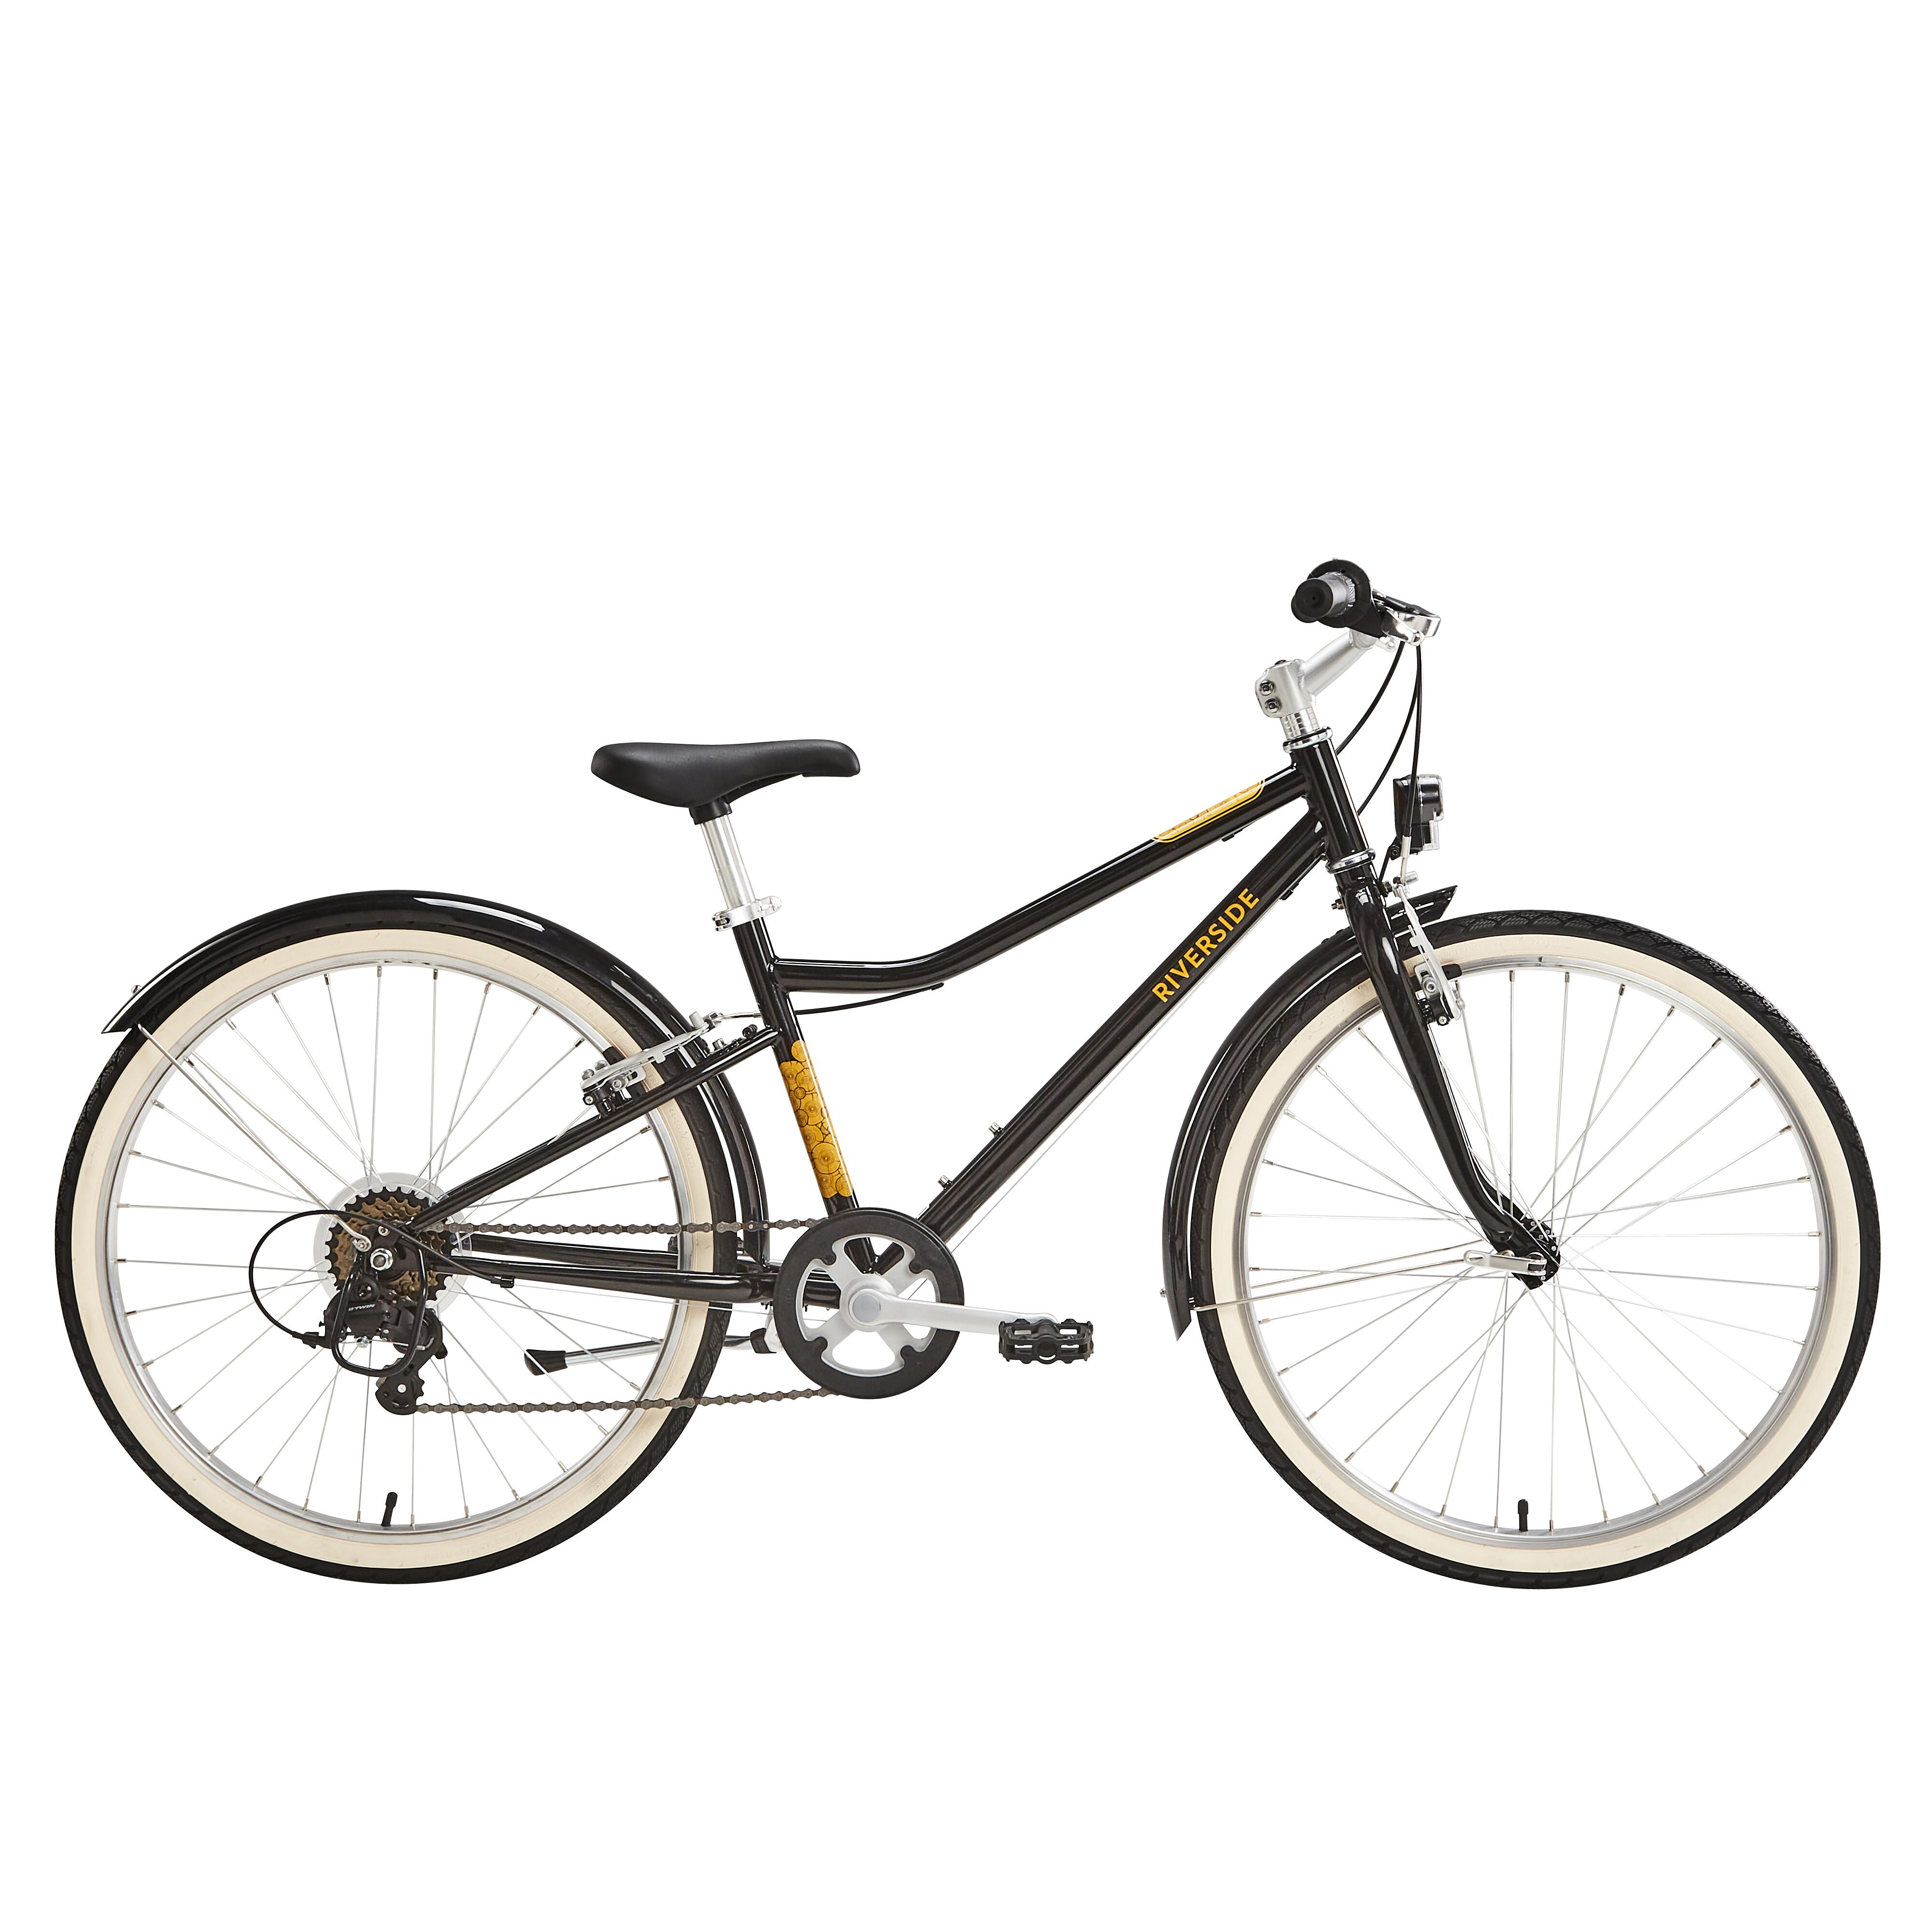 Bicicletă polivalentă Riverside 500 24 inch Negru-Galben Copii 9-12 ani